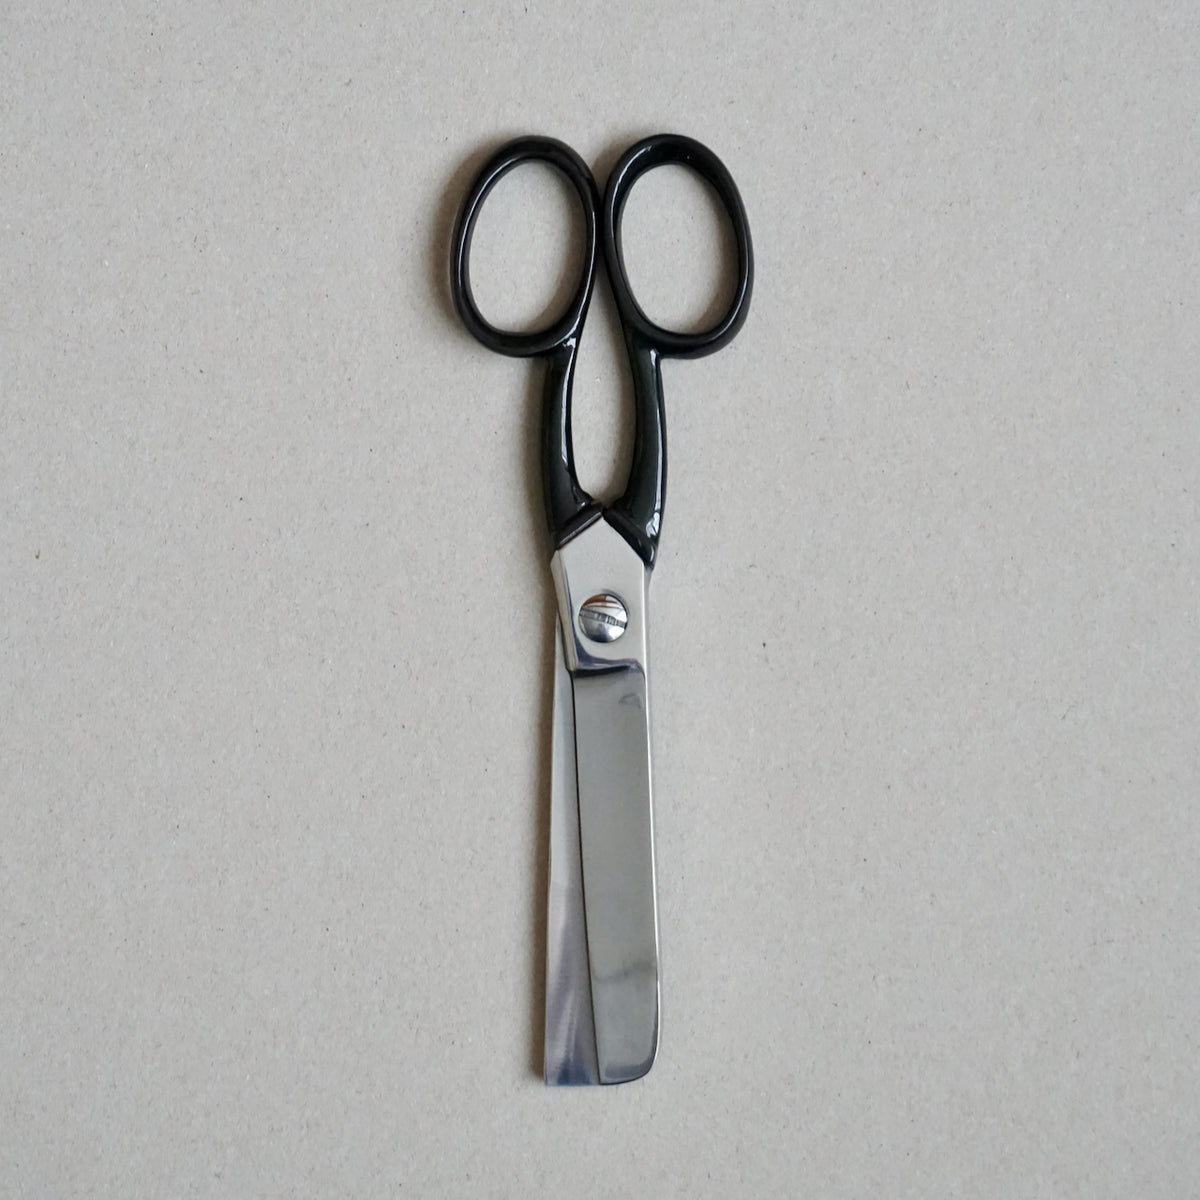 Cardboard scissors  Bookbinder Scissors